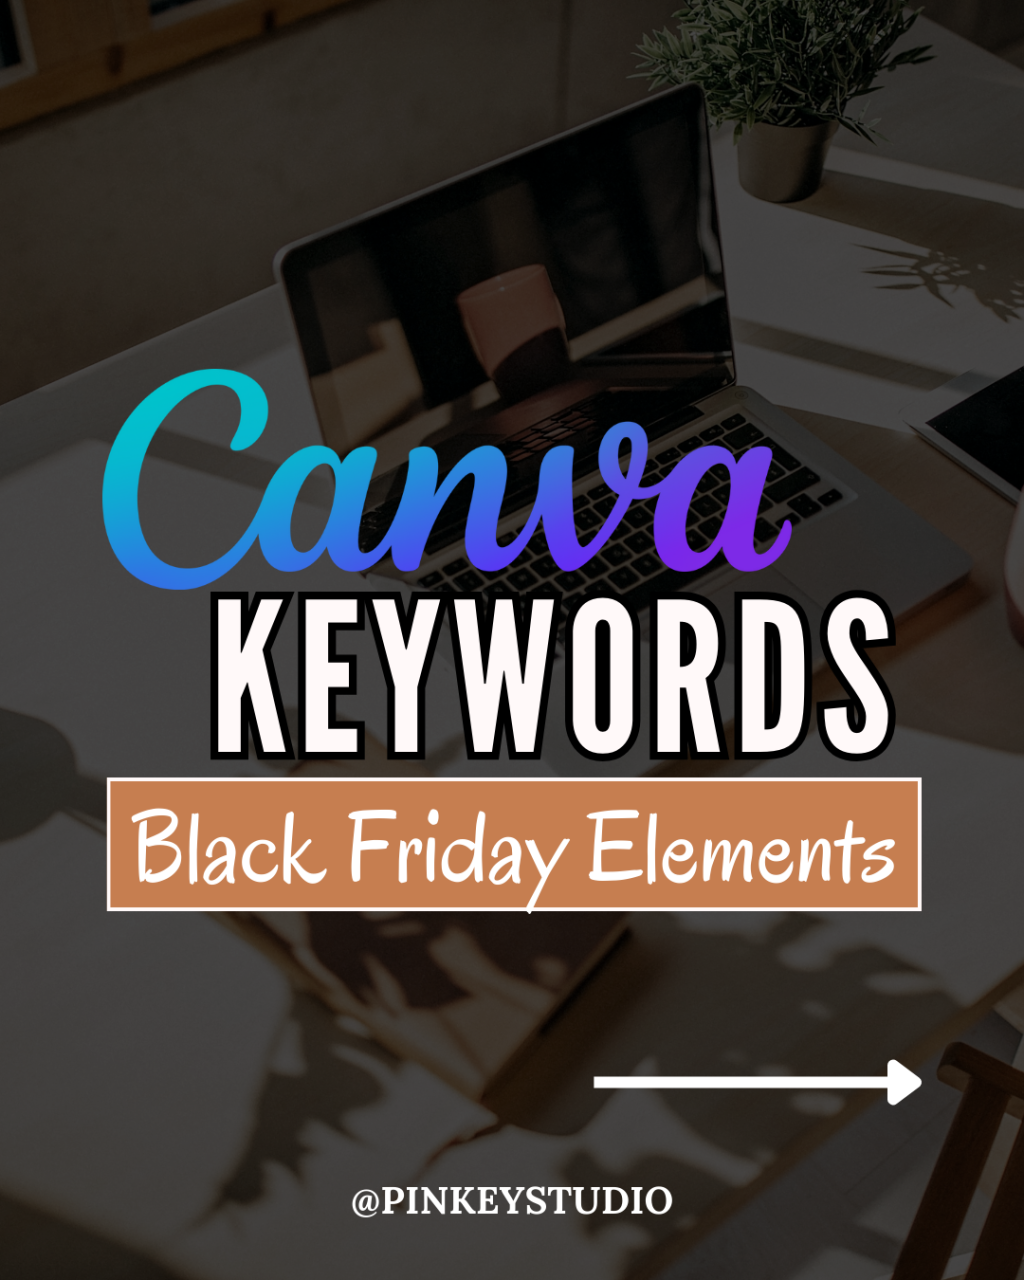 Black Friday Canva elements Keyword Search